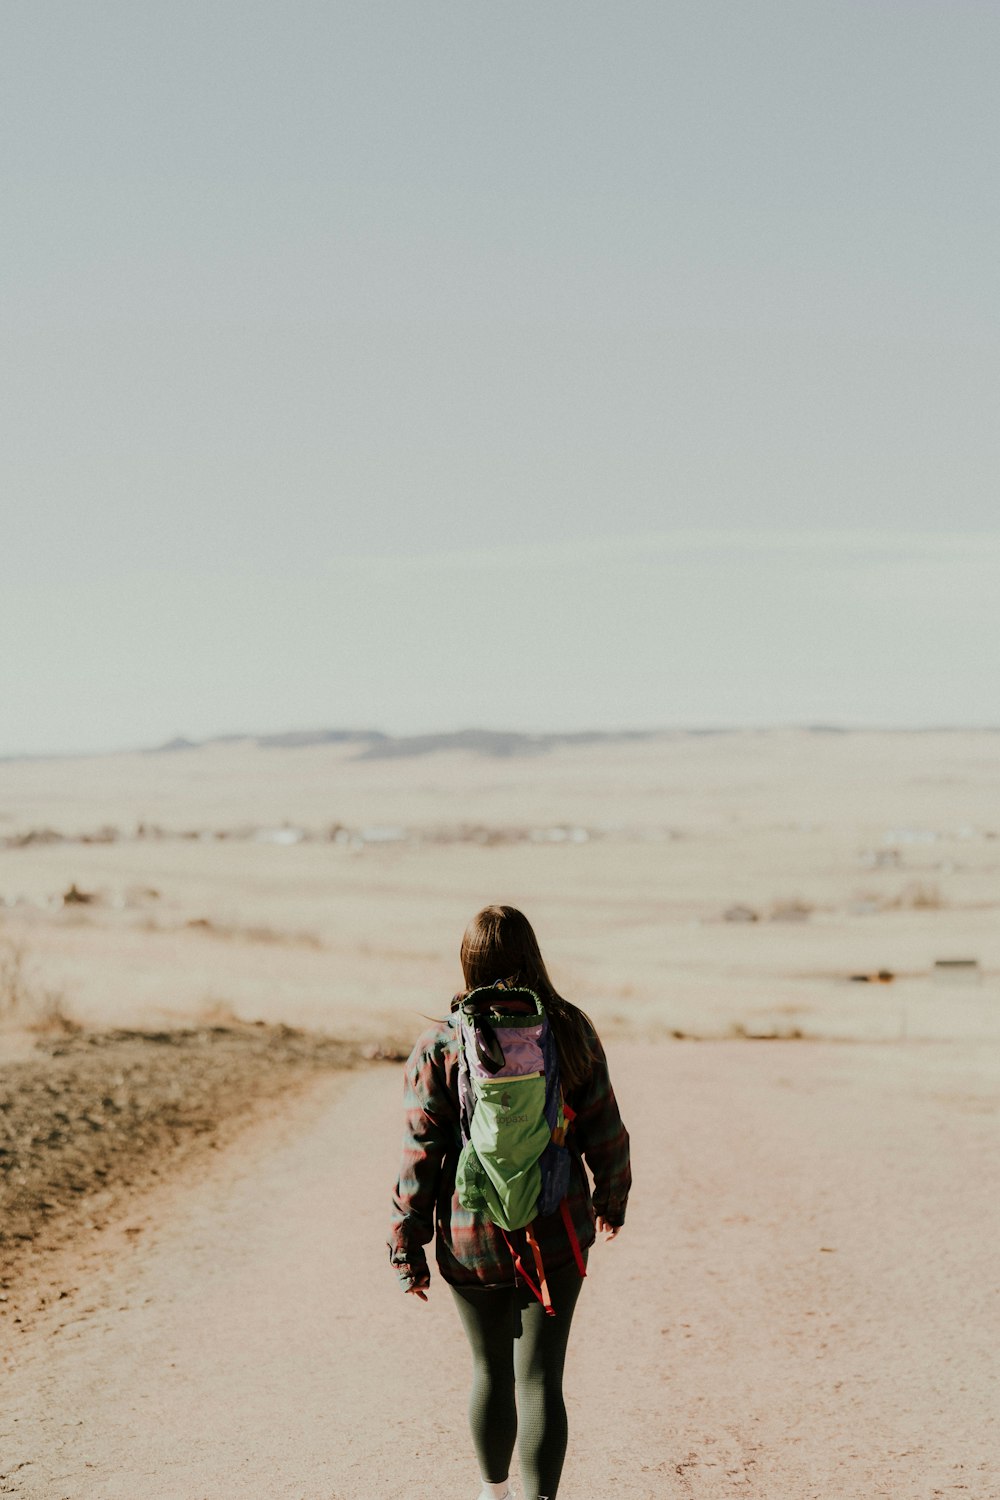 a woman walking down a dirt road in the desert